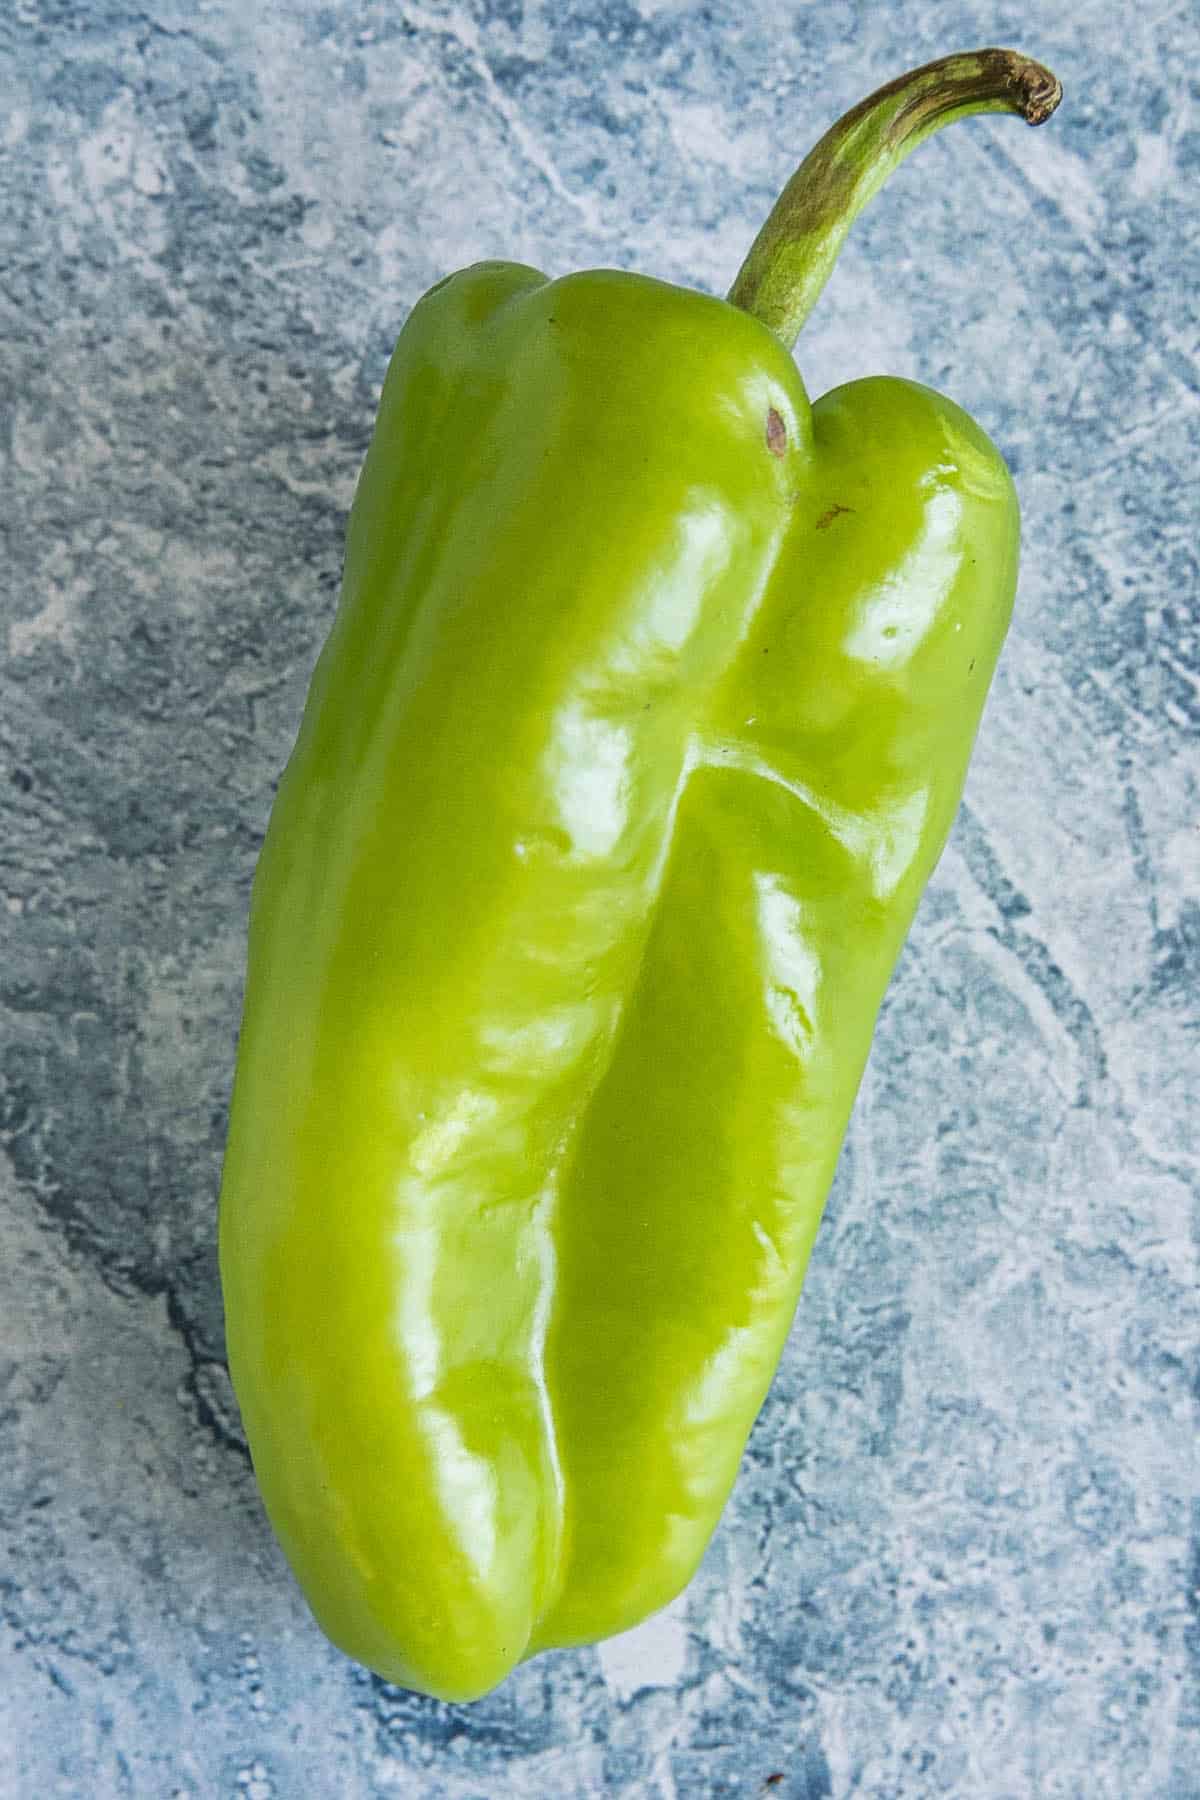 A single Cubanelle Pepper